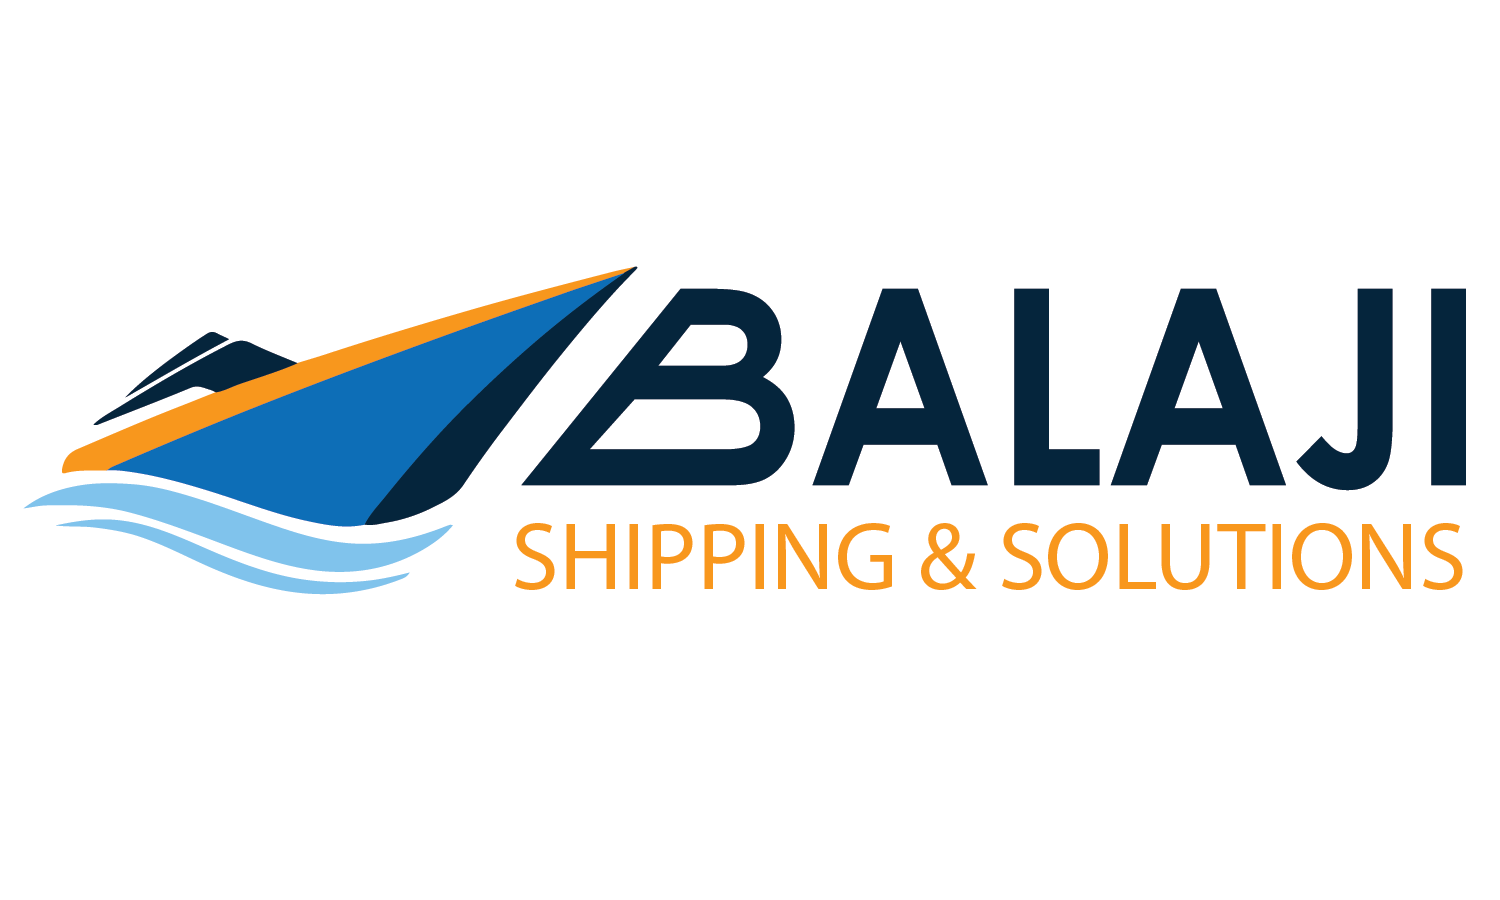 Balaji Shipping India